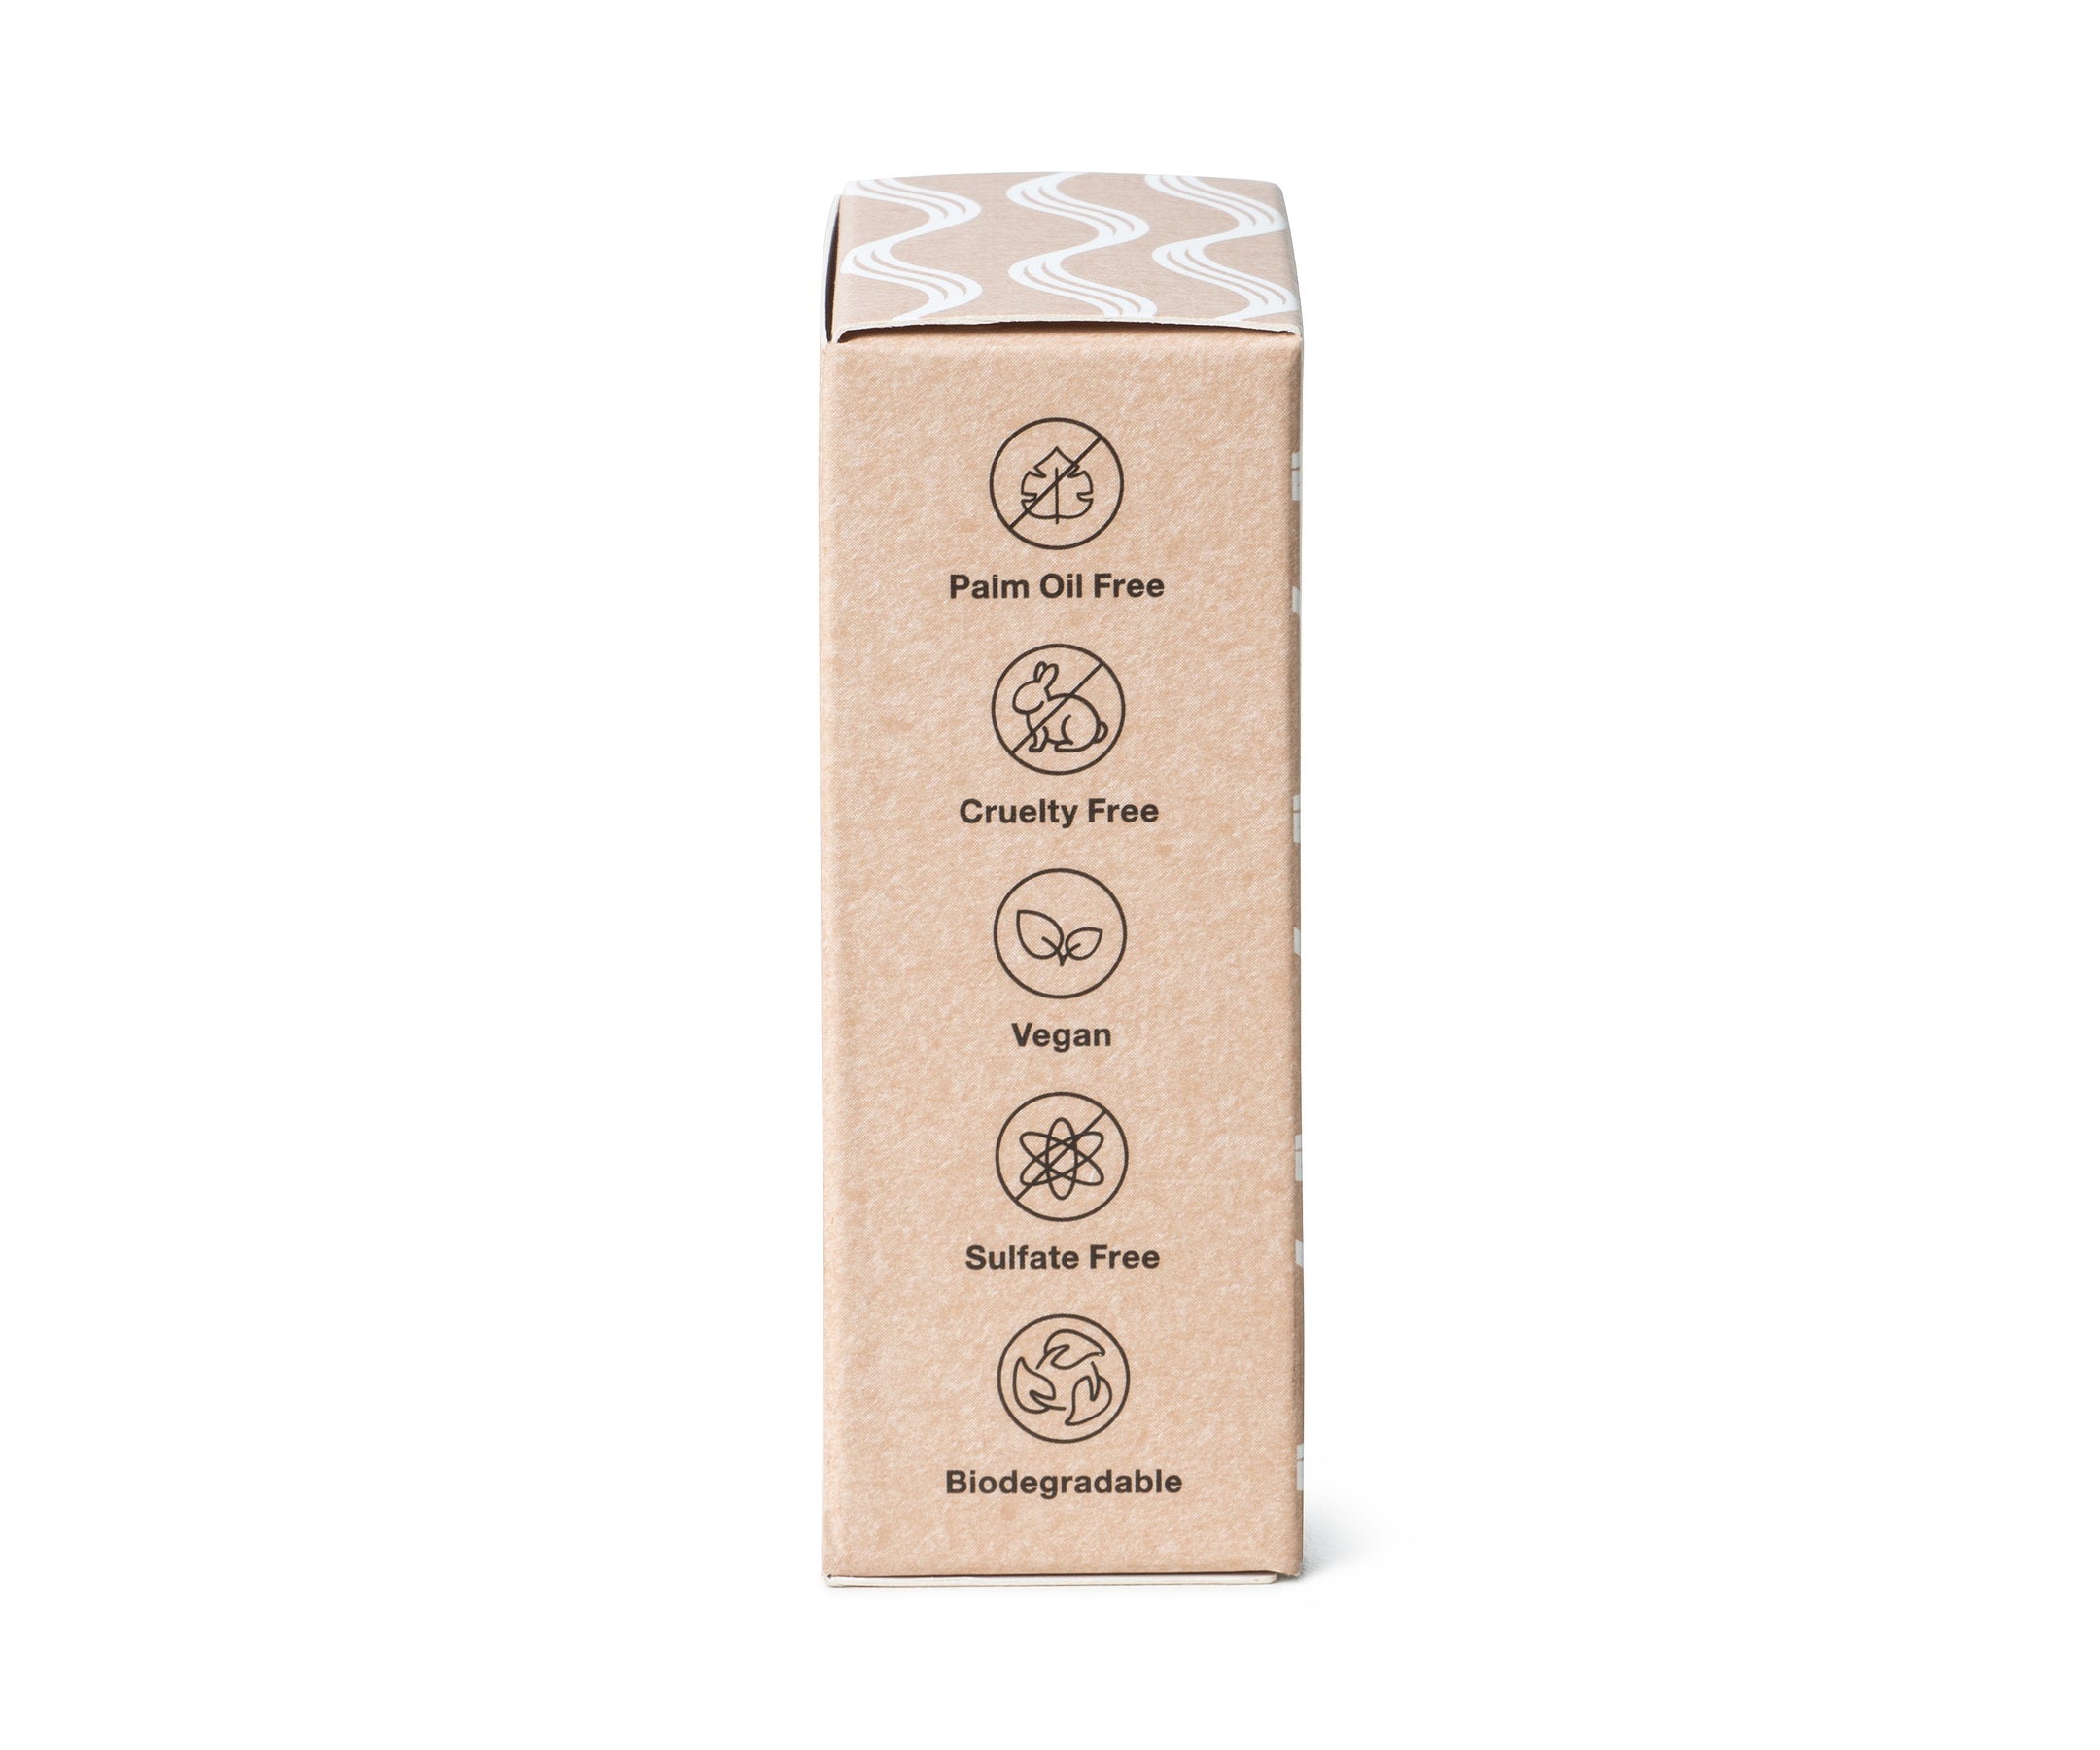 Australian Natural Soap Company conditioning shampoo bar left side of box